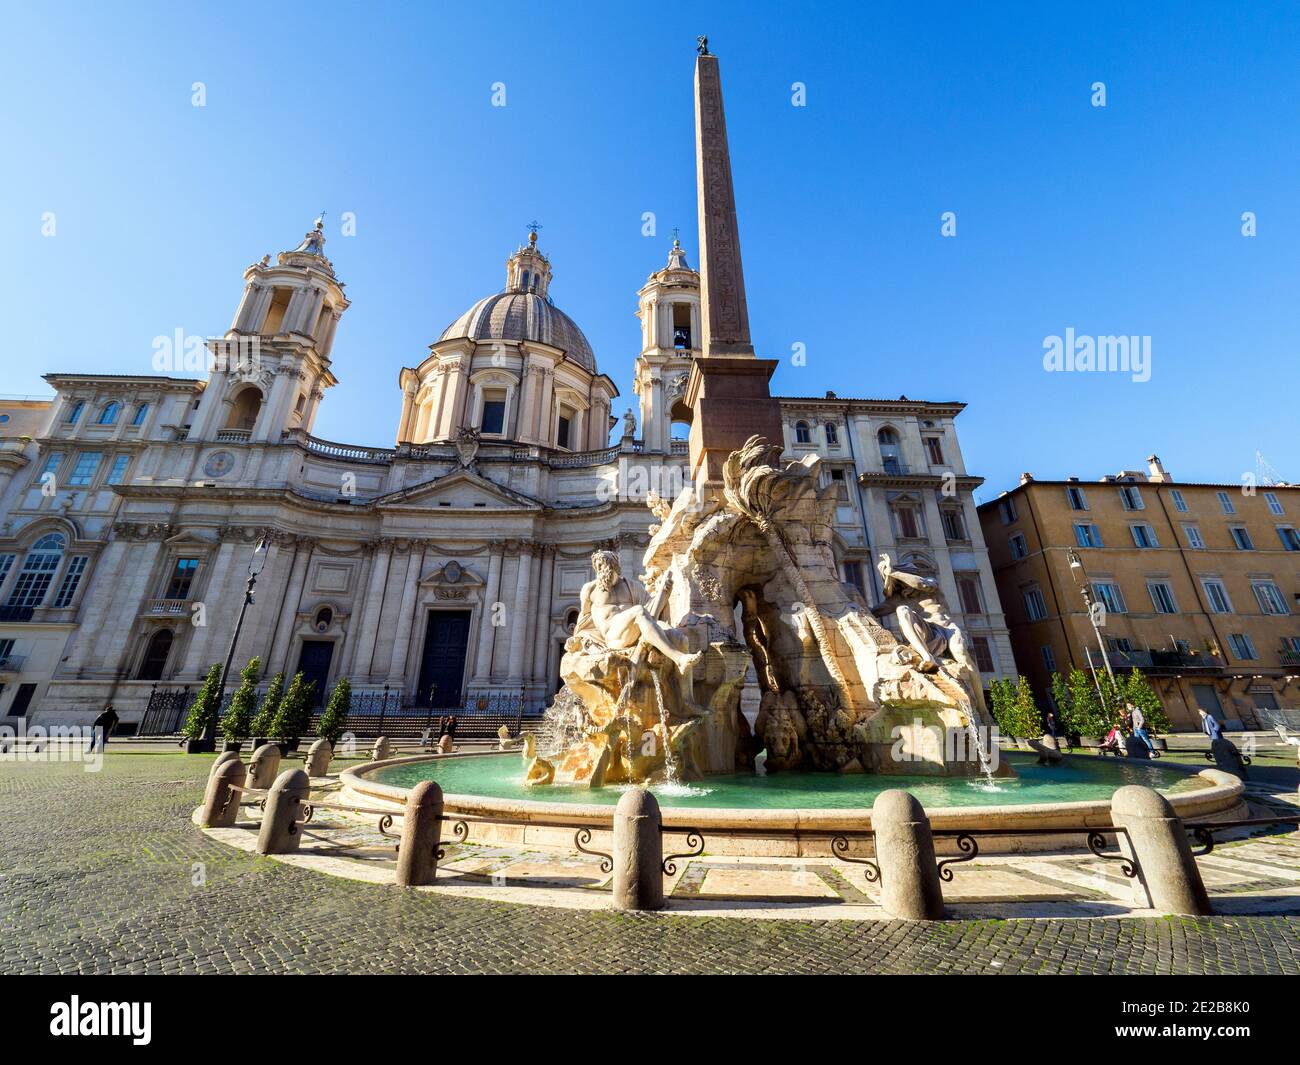 Sant'Agnese in Agone church and Fontana dei Quattro Fiumi in Piazza Navona - Rome, Italy Stock Photo